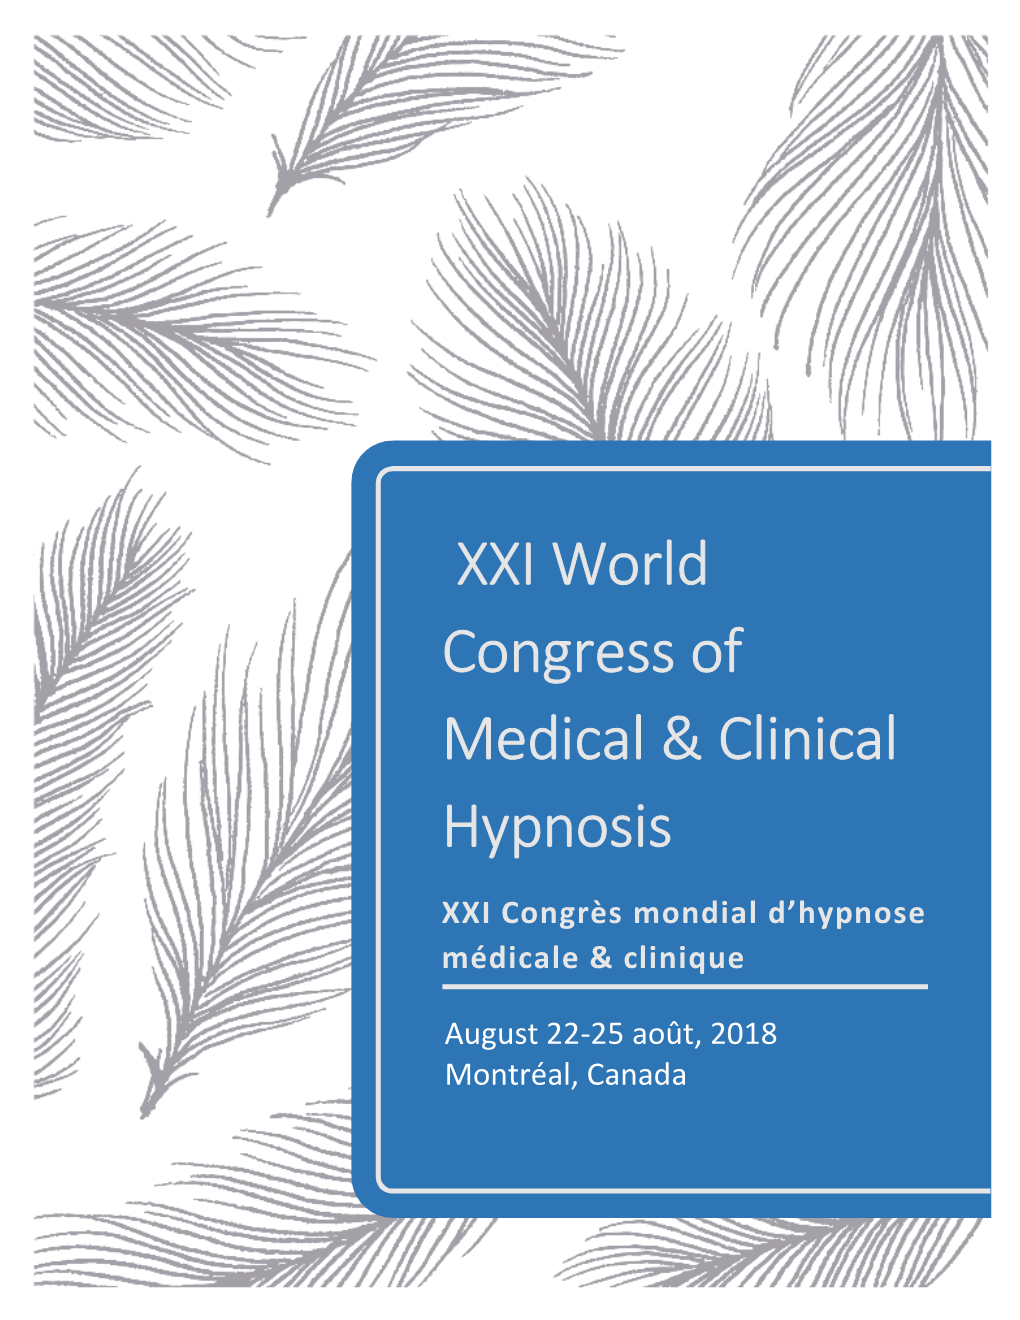 Orld Congress of Medical & Clinical Hypnosis